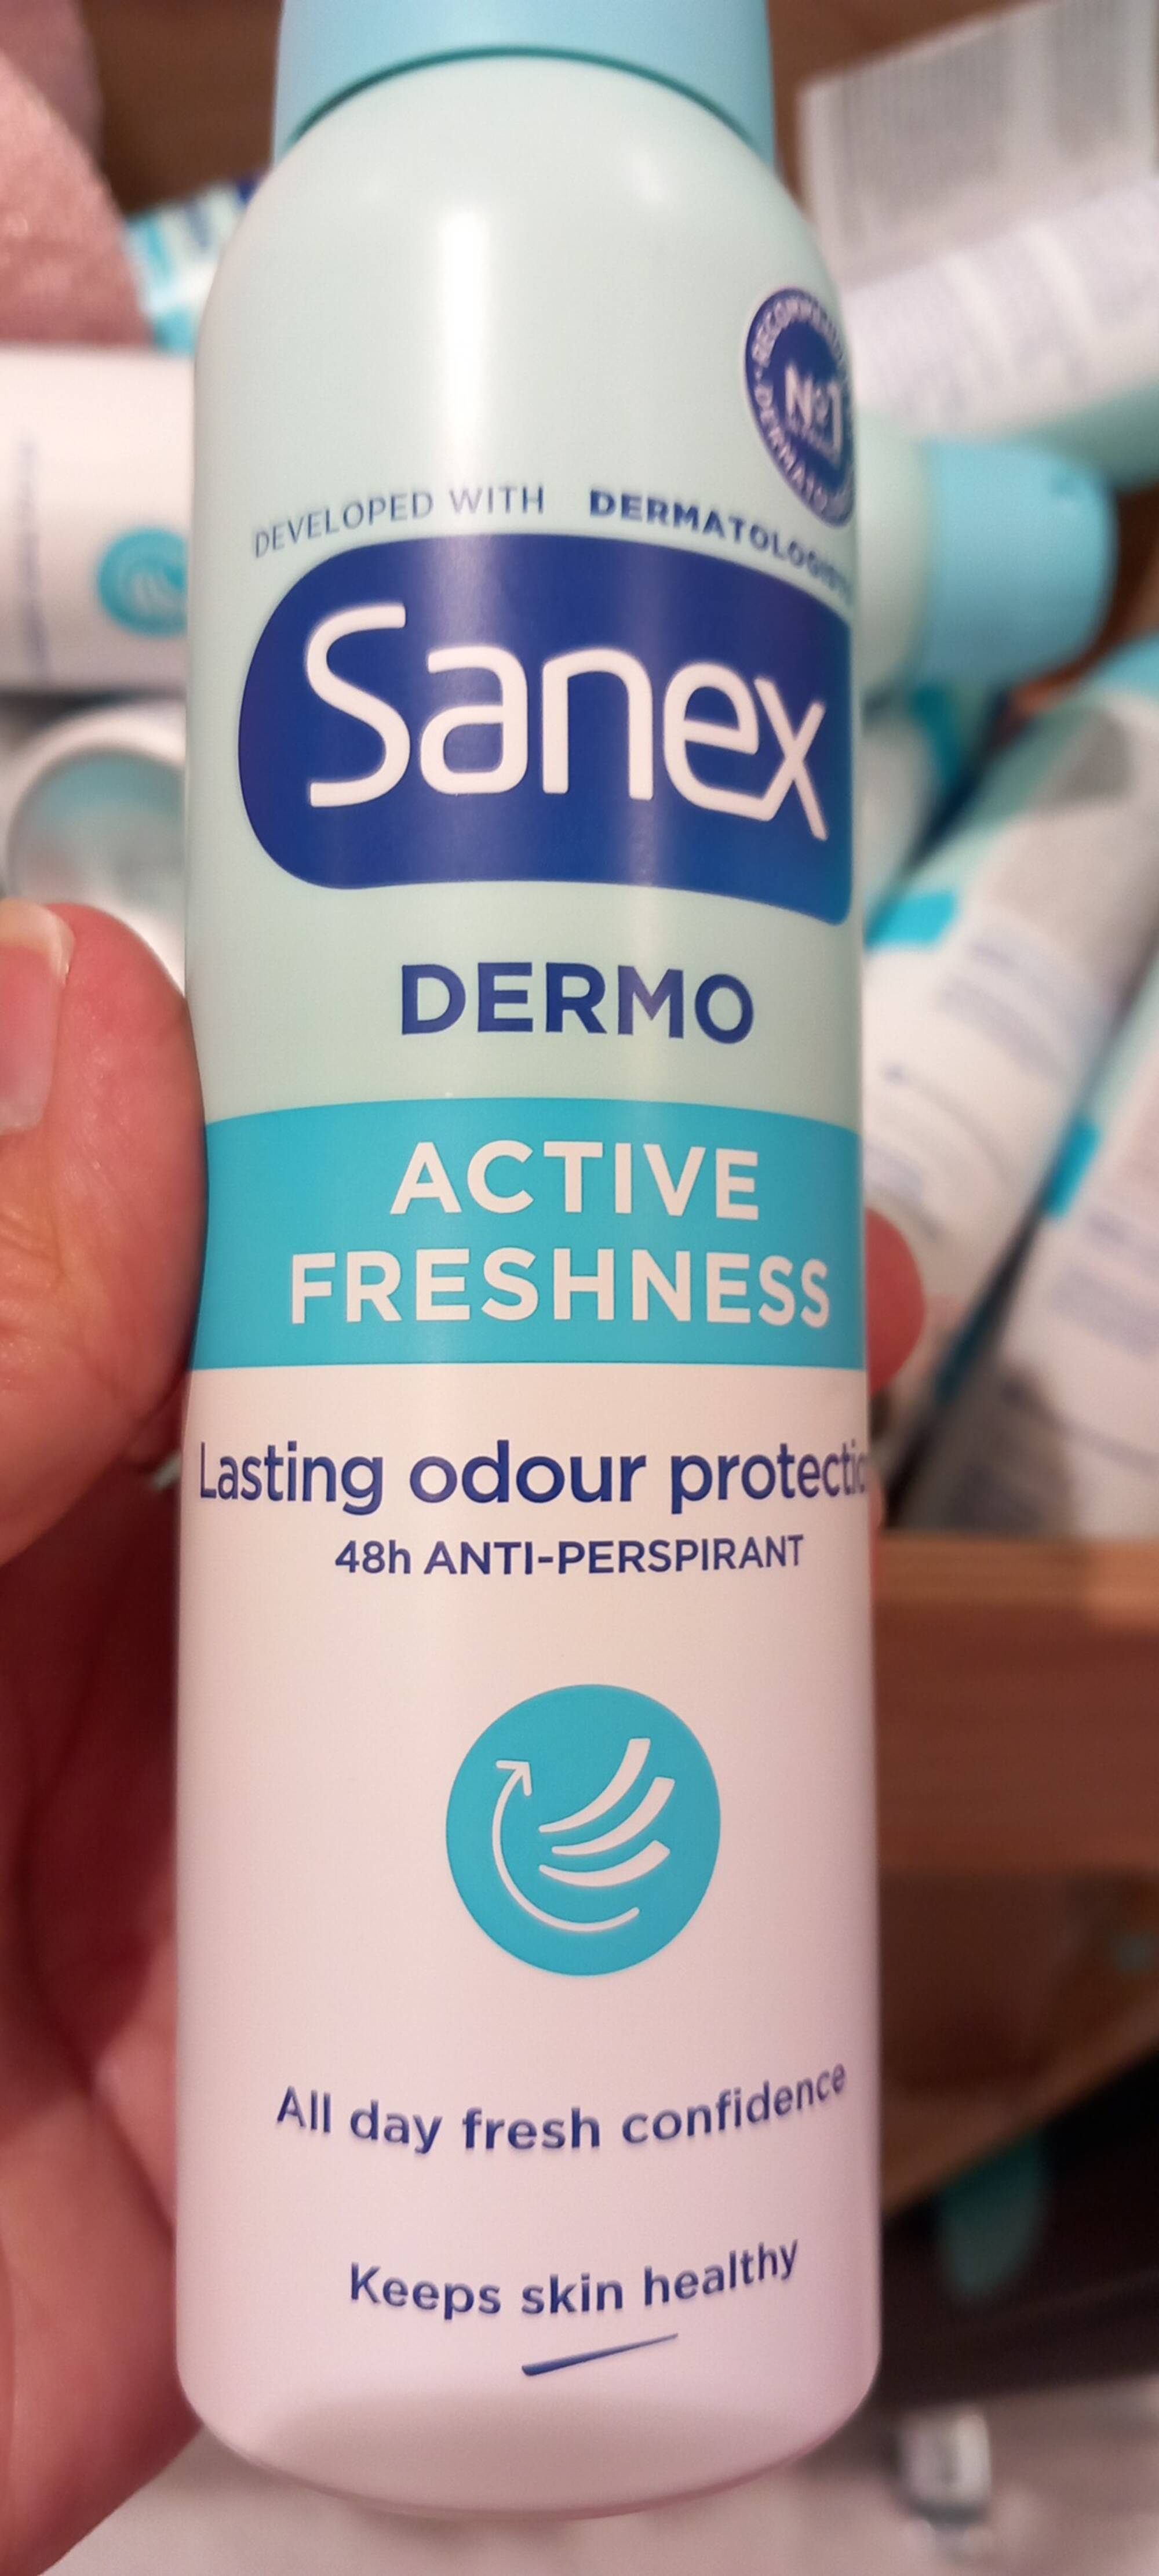 SANEX - Lasting odour protection 48h anti-perspirant